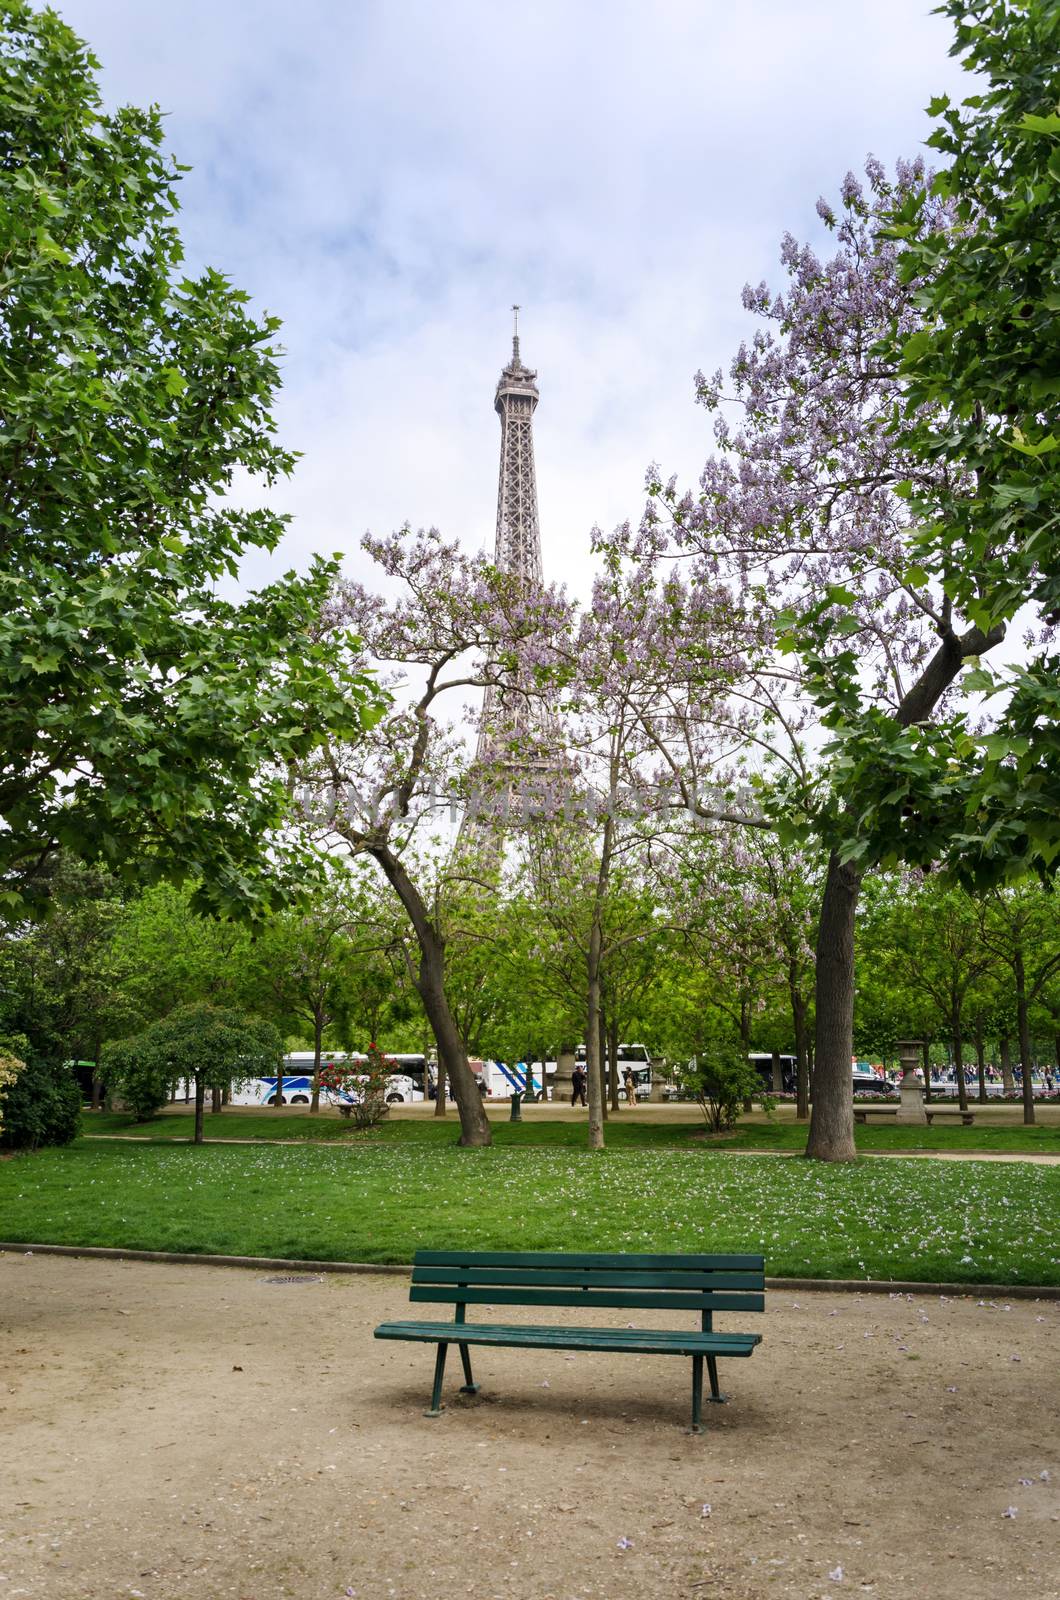 Eiffel Tower at Champ de Mars Park by siraanamwong